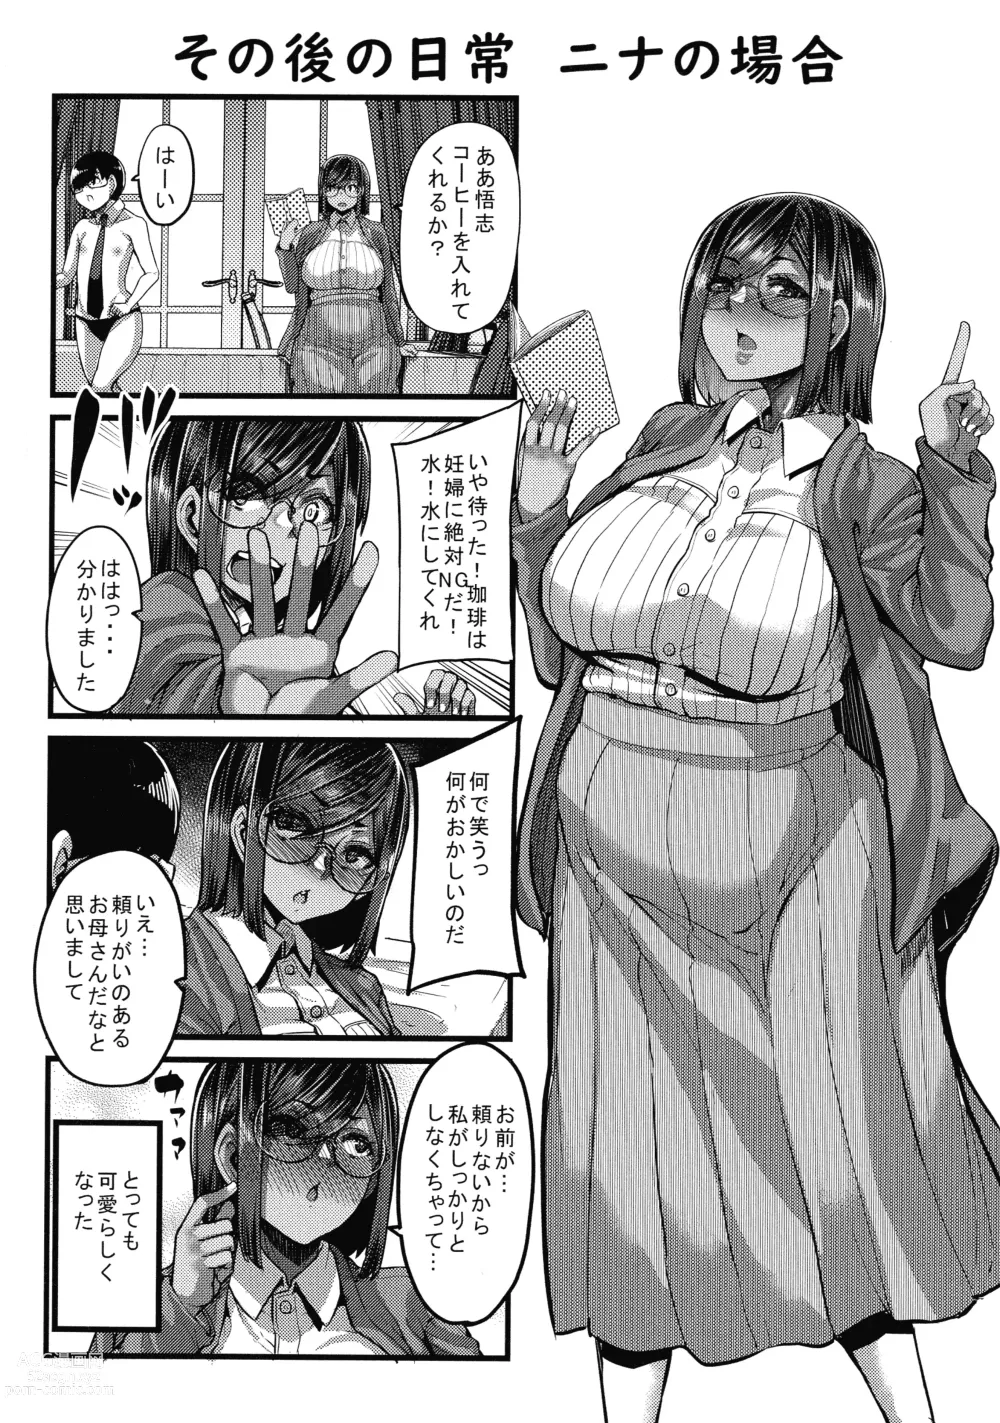 Page 202 of manga Kasshoku Hime to Himitsu no Keiyaku